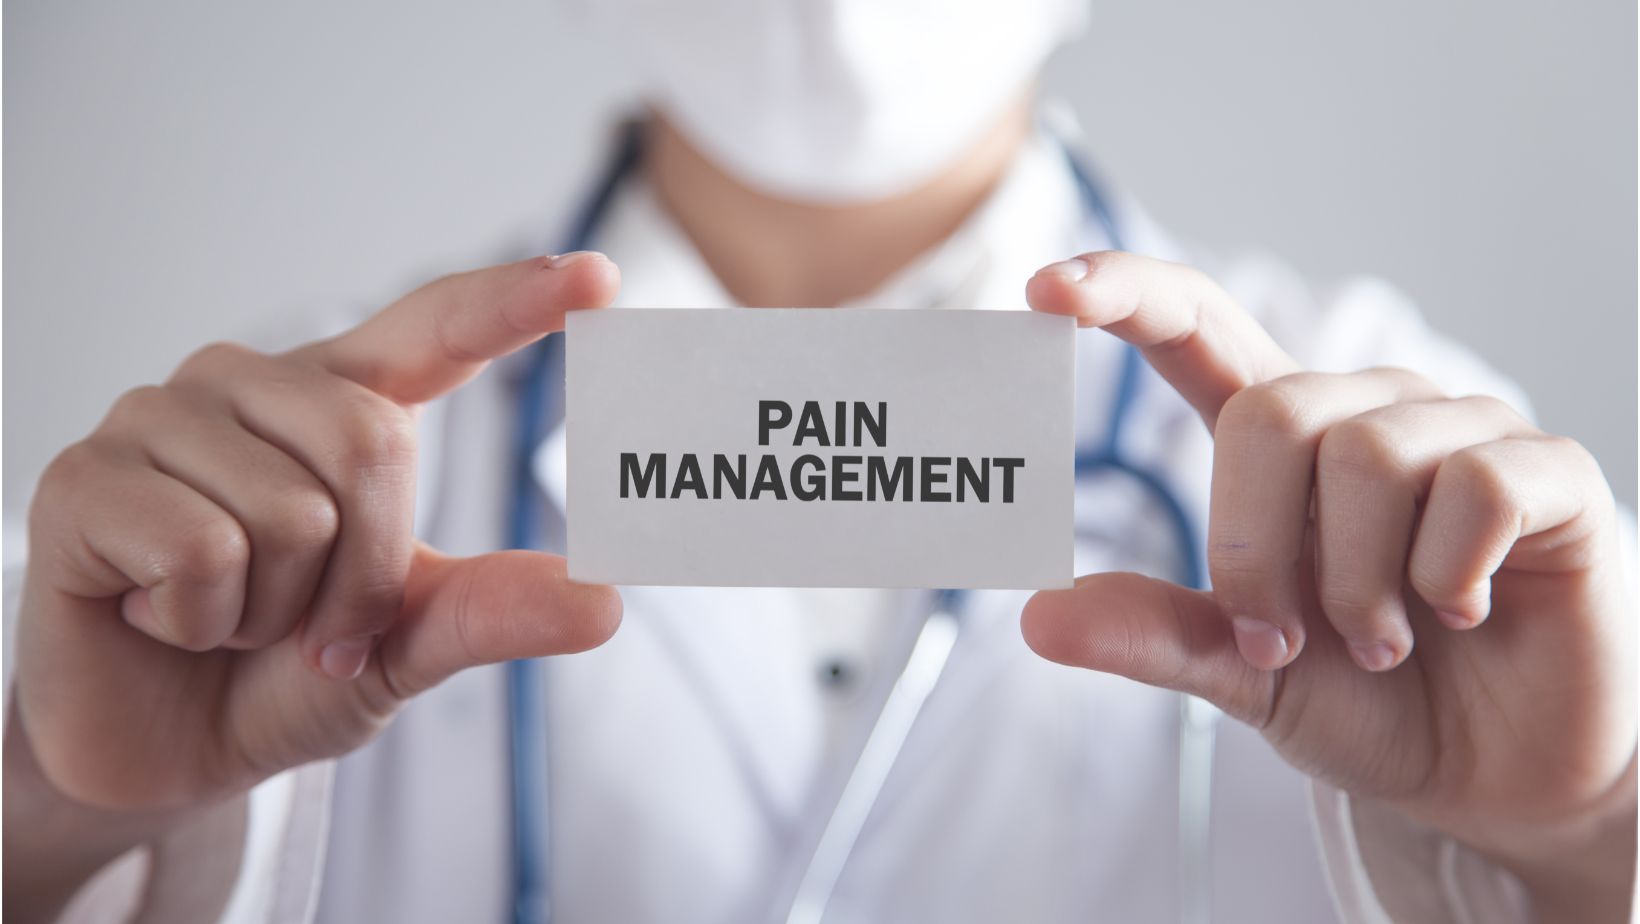 Overdose Prevention Through Alternative Pain Management Methods